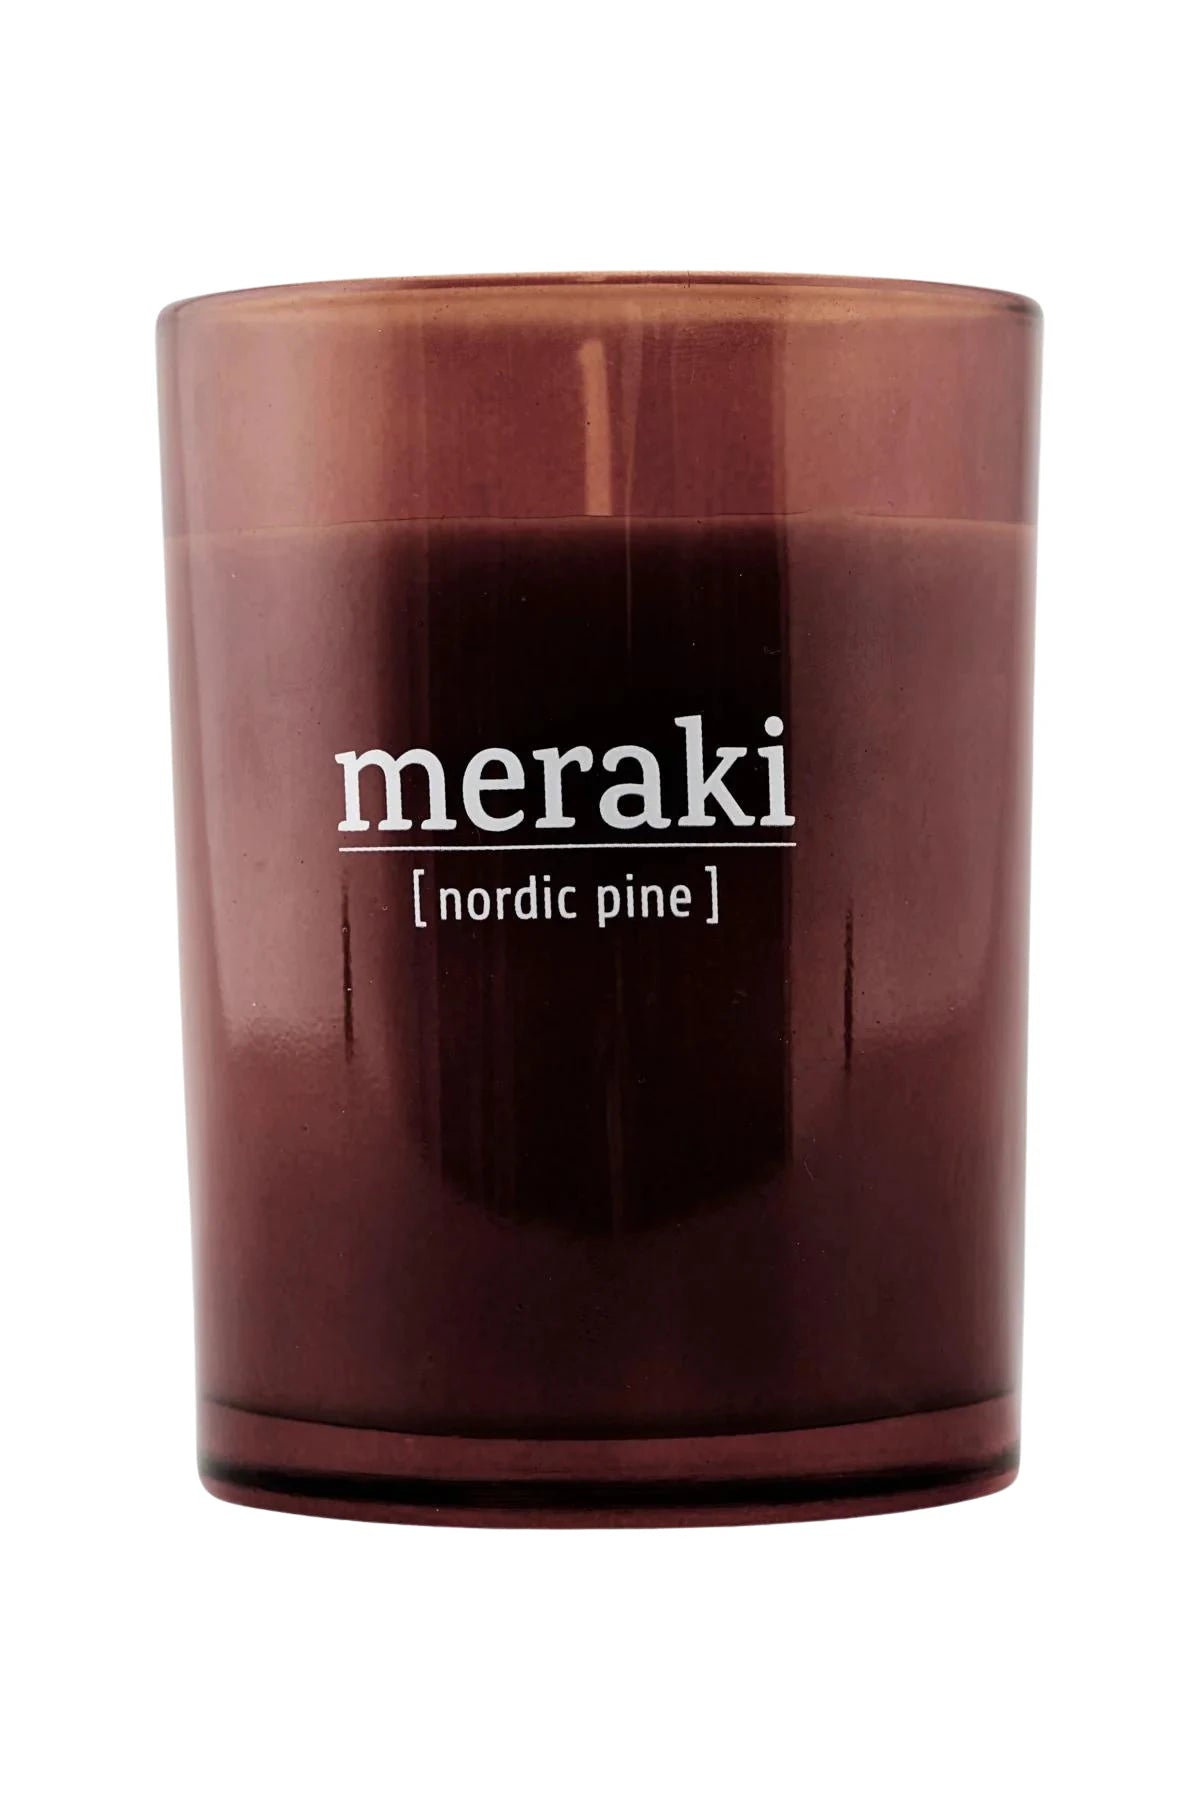 Meraki Large Nordic Pine Candle  - Lifestory